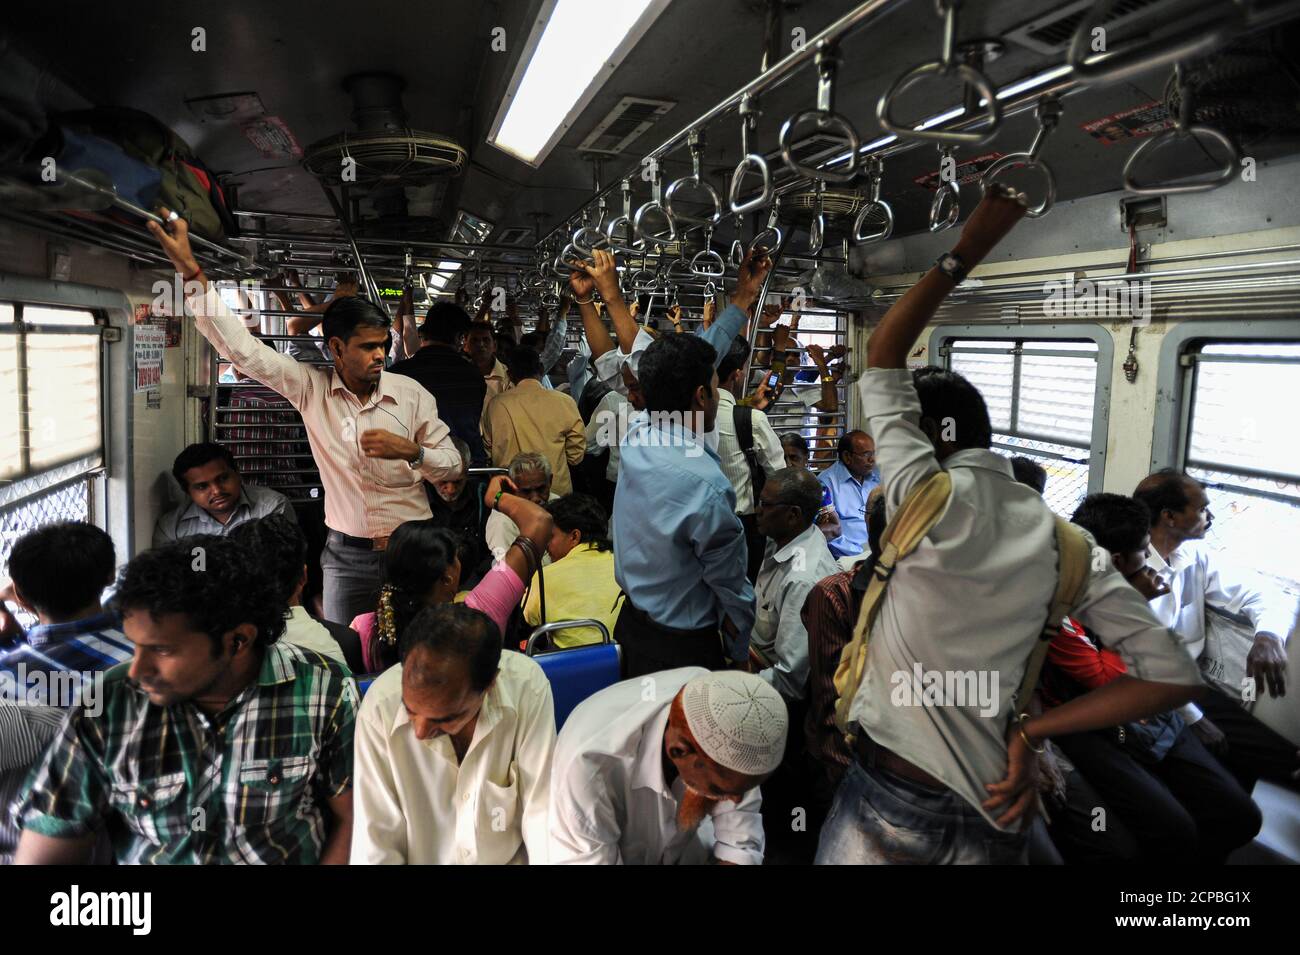 08.12.2011, Mumbai (Bombay), Maharashtra, India, Asia - Commuters inside a totally overcrowded local train during rush hour. Stock Photo